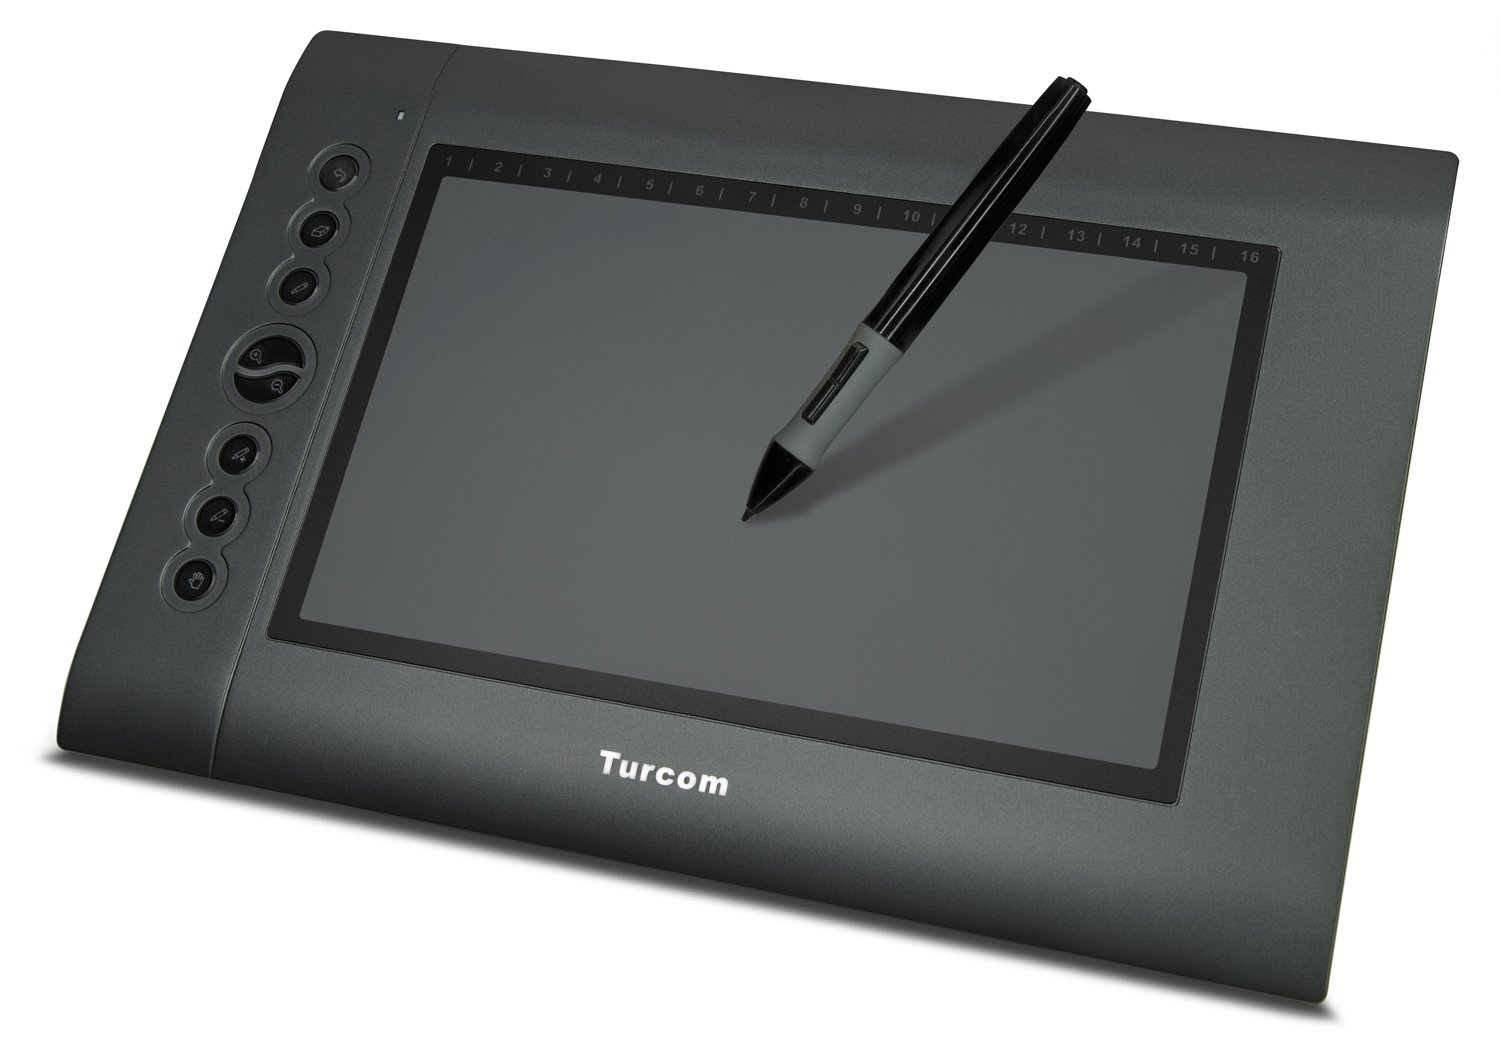 Pen drawing pad. Графический планшет gt 112. Графический планшет Keyron gt-112. Графический планшет XP-Pen. Wacom графический планшет a4.